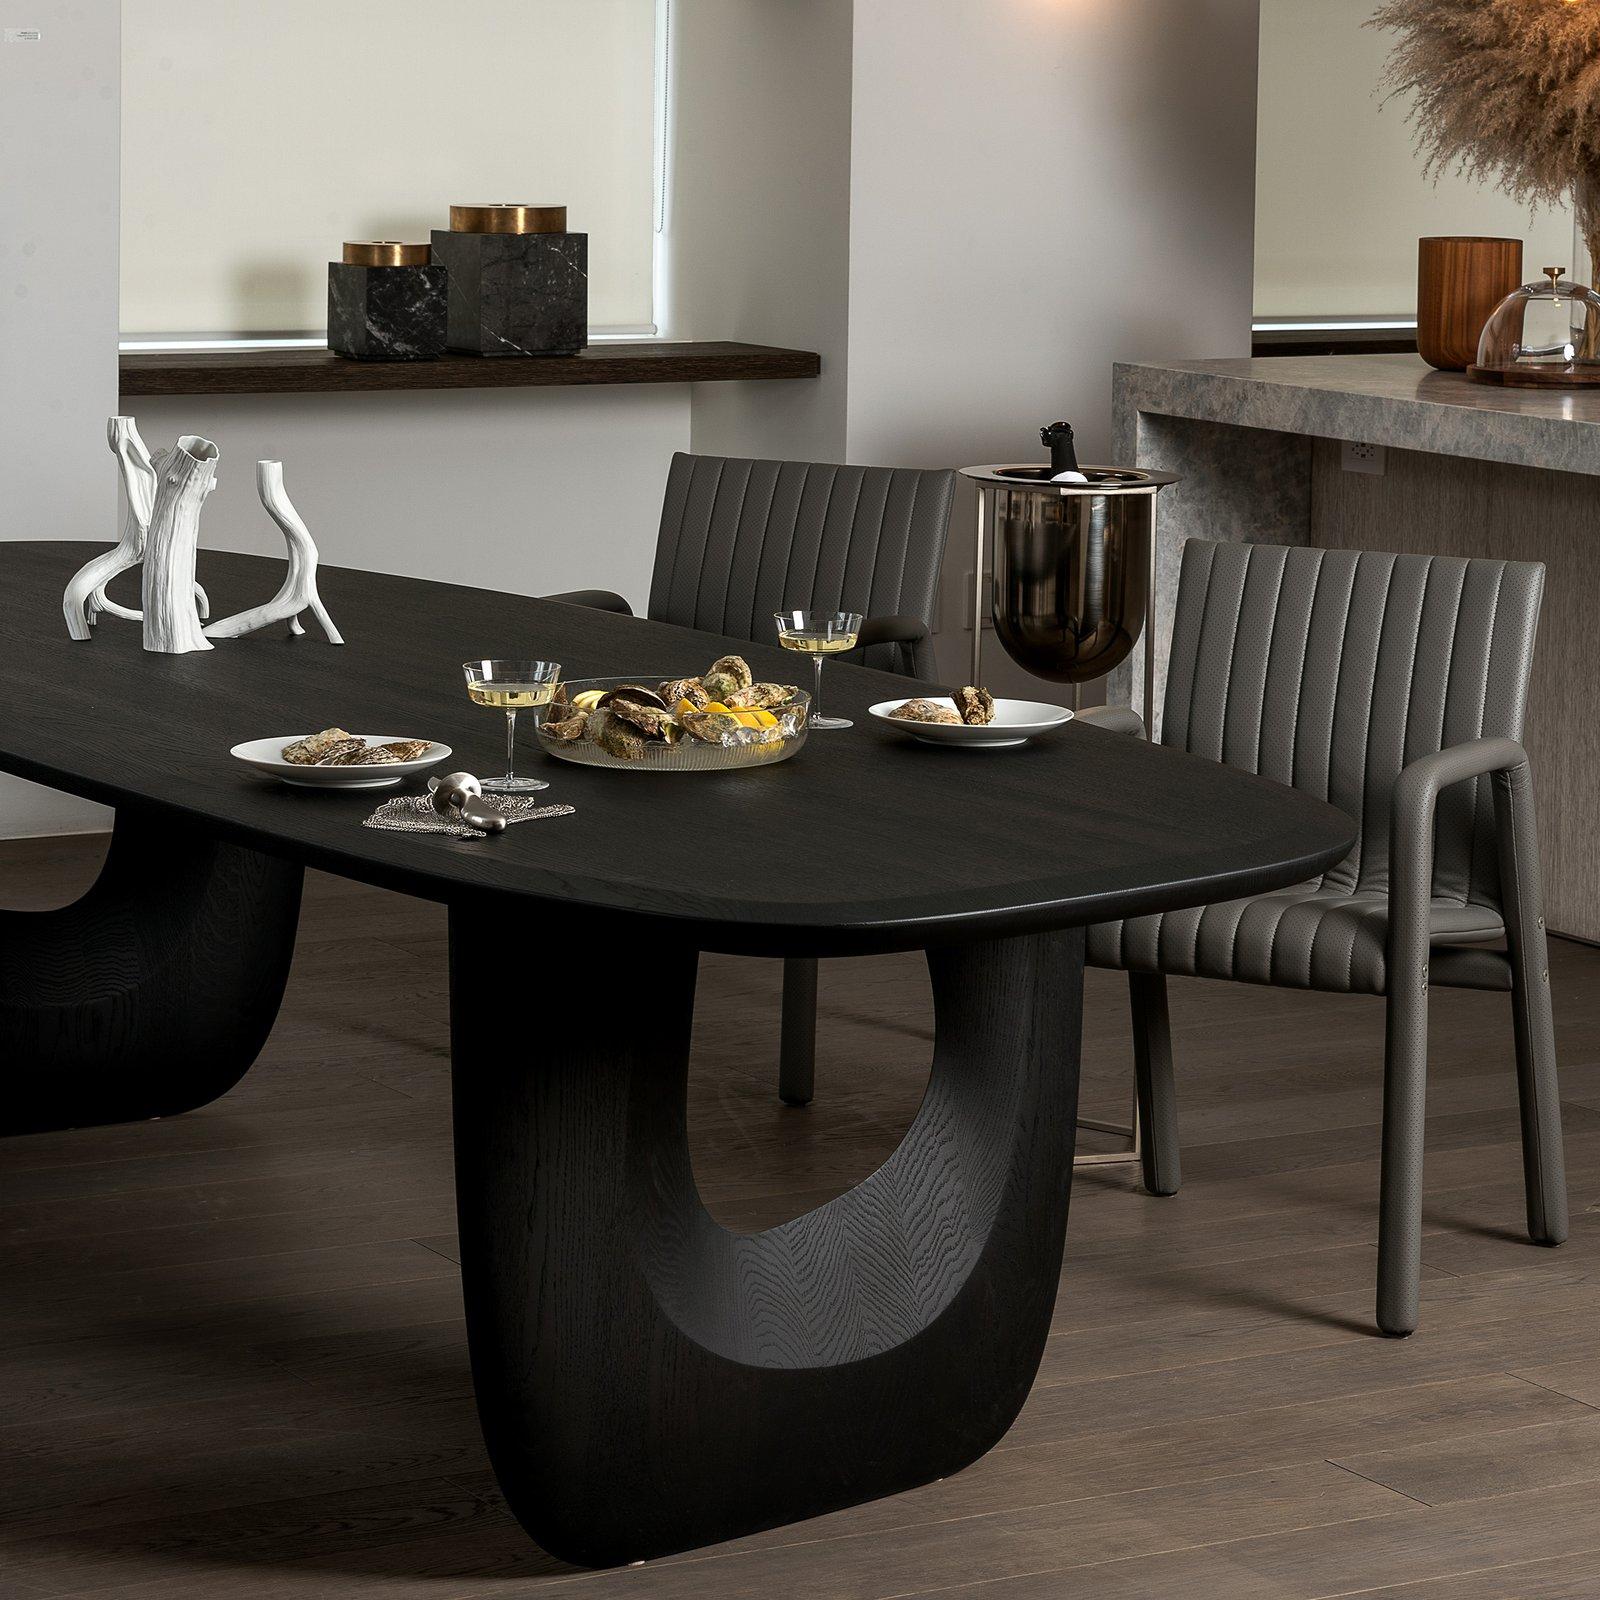 Savignyplatz Dining Table by Sebastian Herkner in Black Pepper Oak In New Condition For Sale In Toronto, ON